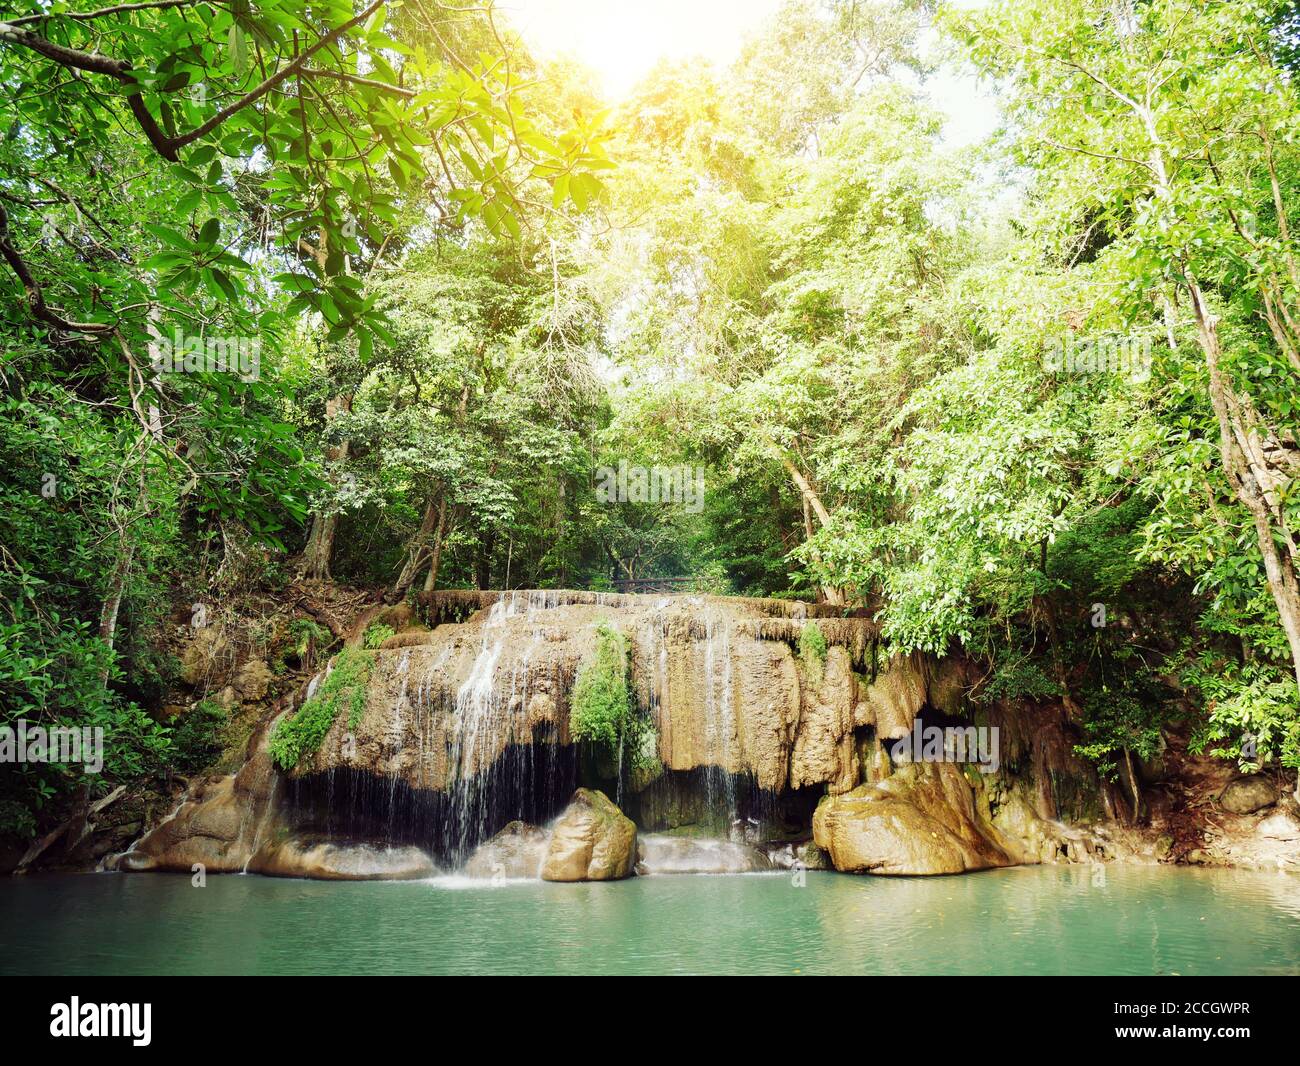 Landscape photo, Erawan Waterfall, beautiful famous waterfall in rain forest at Kanchanaburi province, Thailand Stock Photo